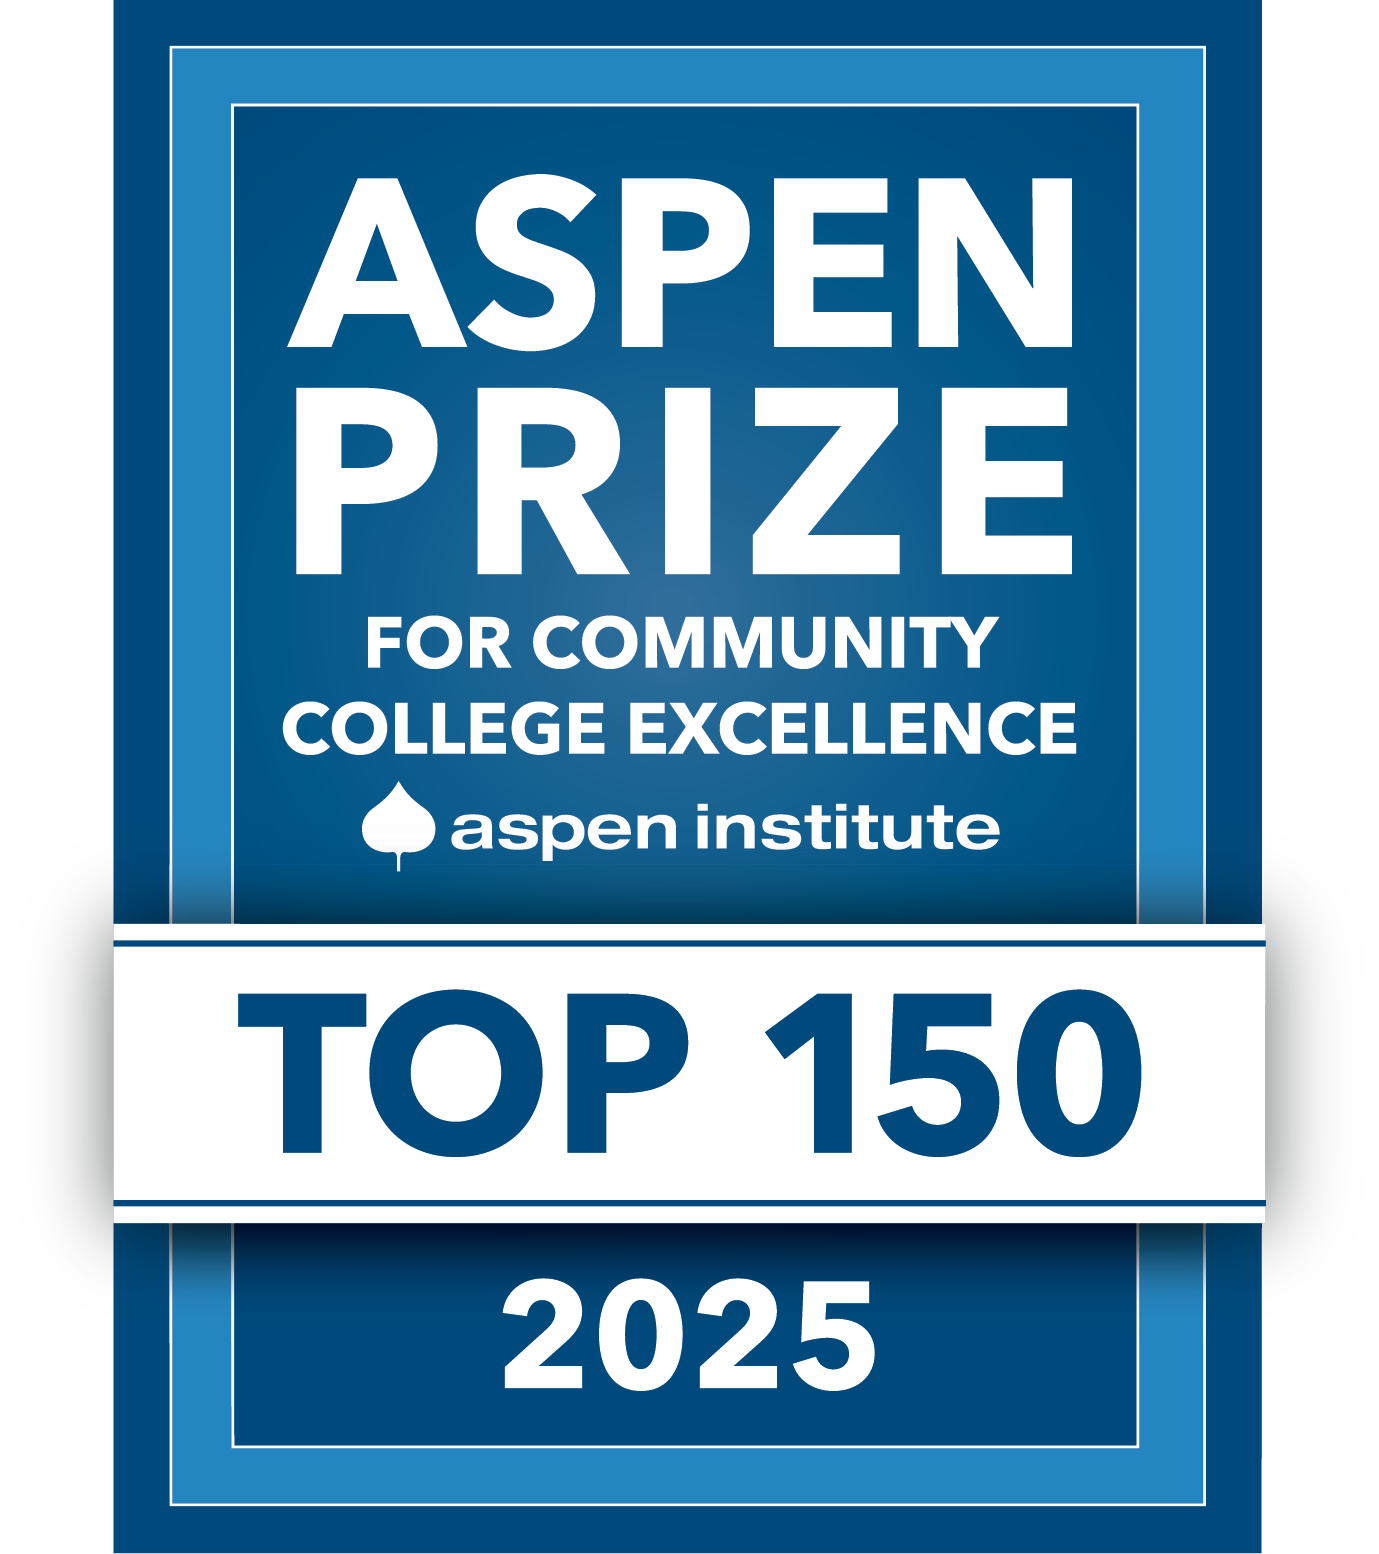 Aspen Prize Top 150 for 2025 badge